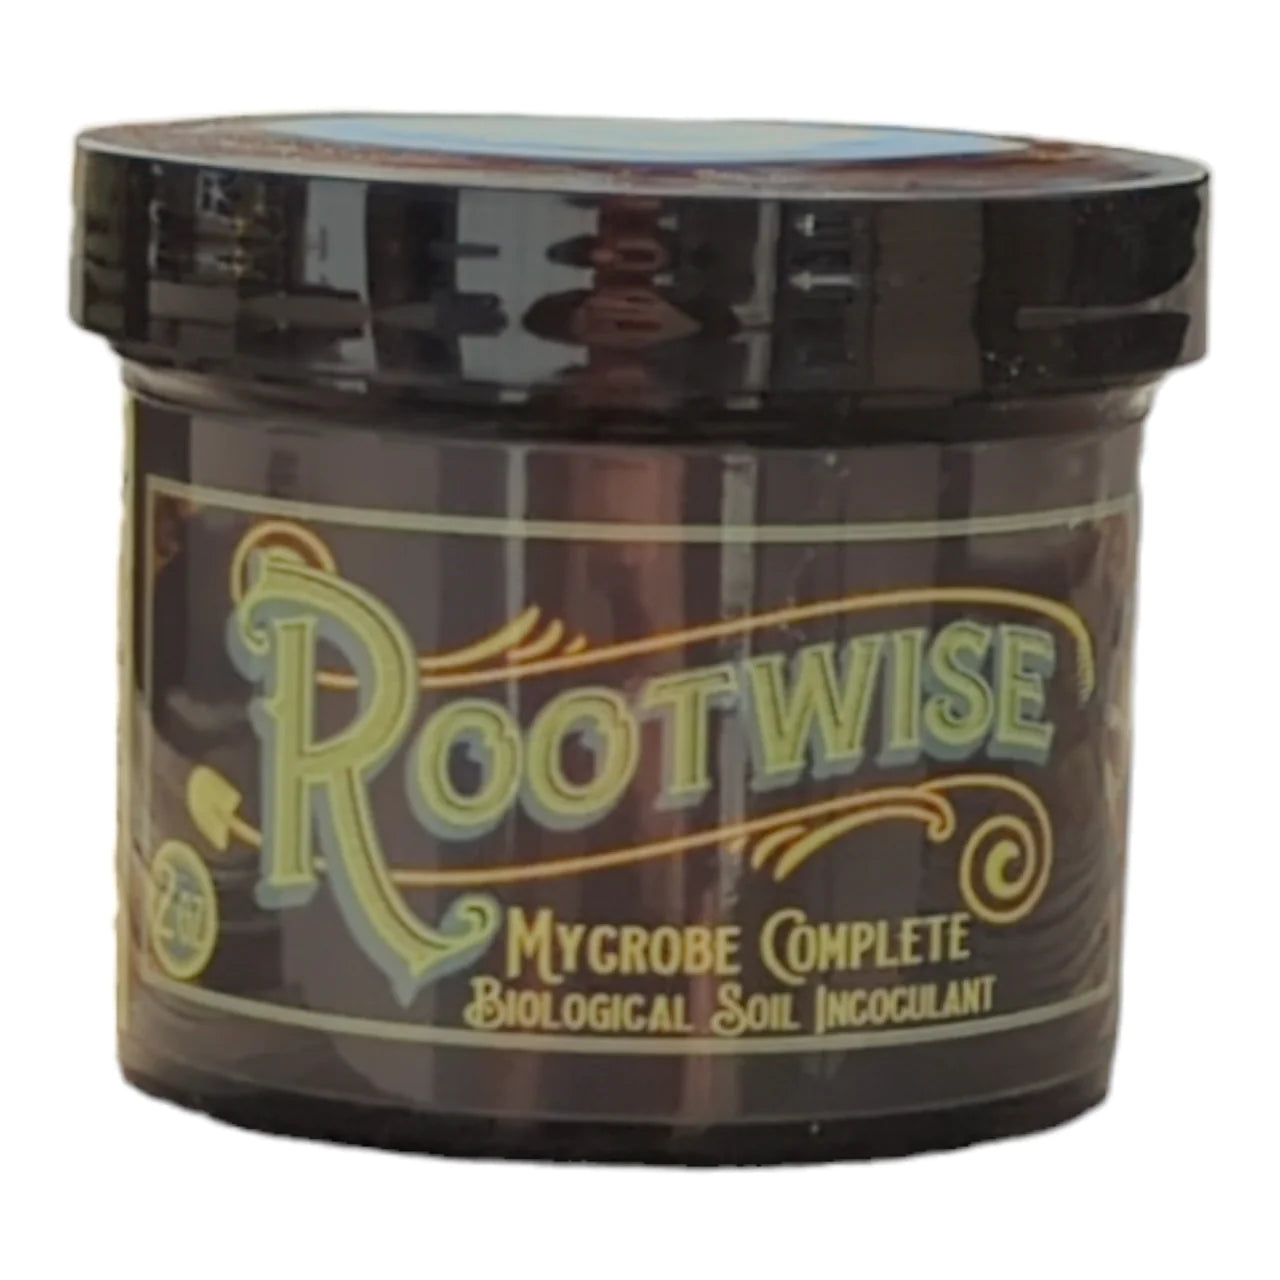 Rootwise Mycrobe Complete-2oz